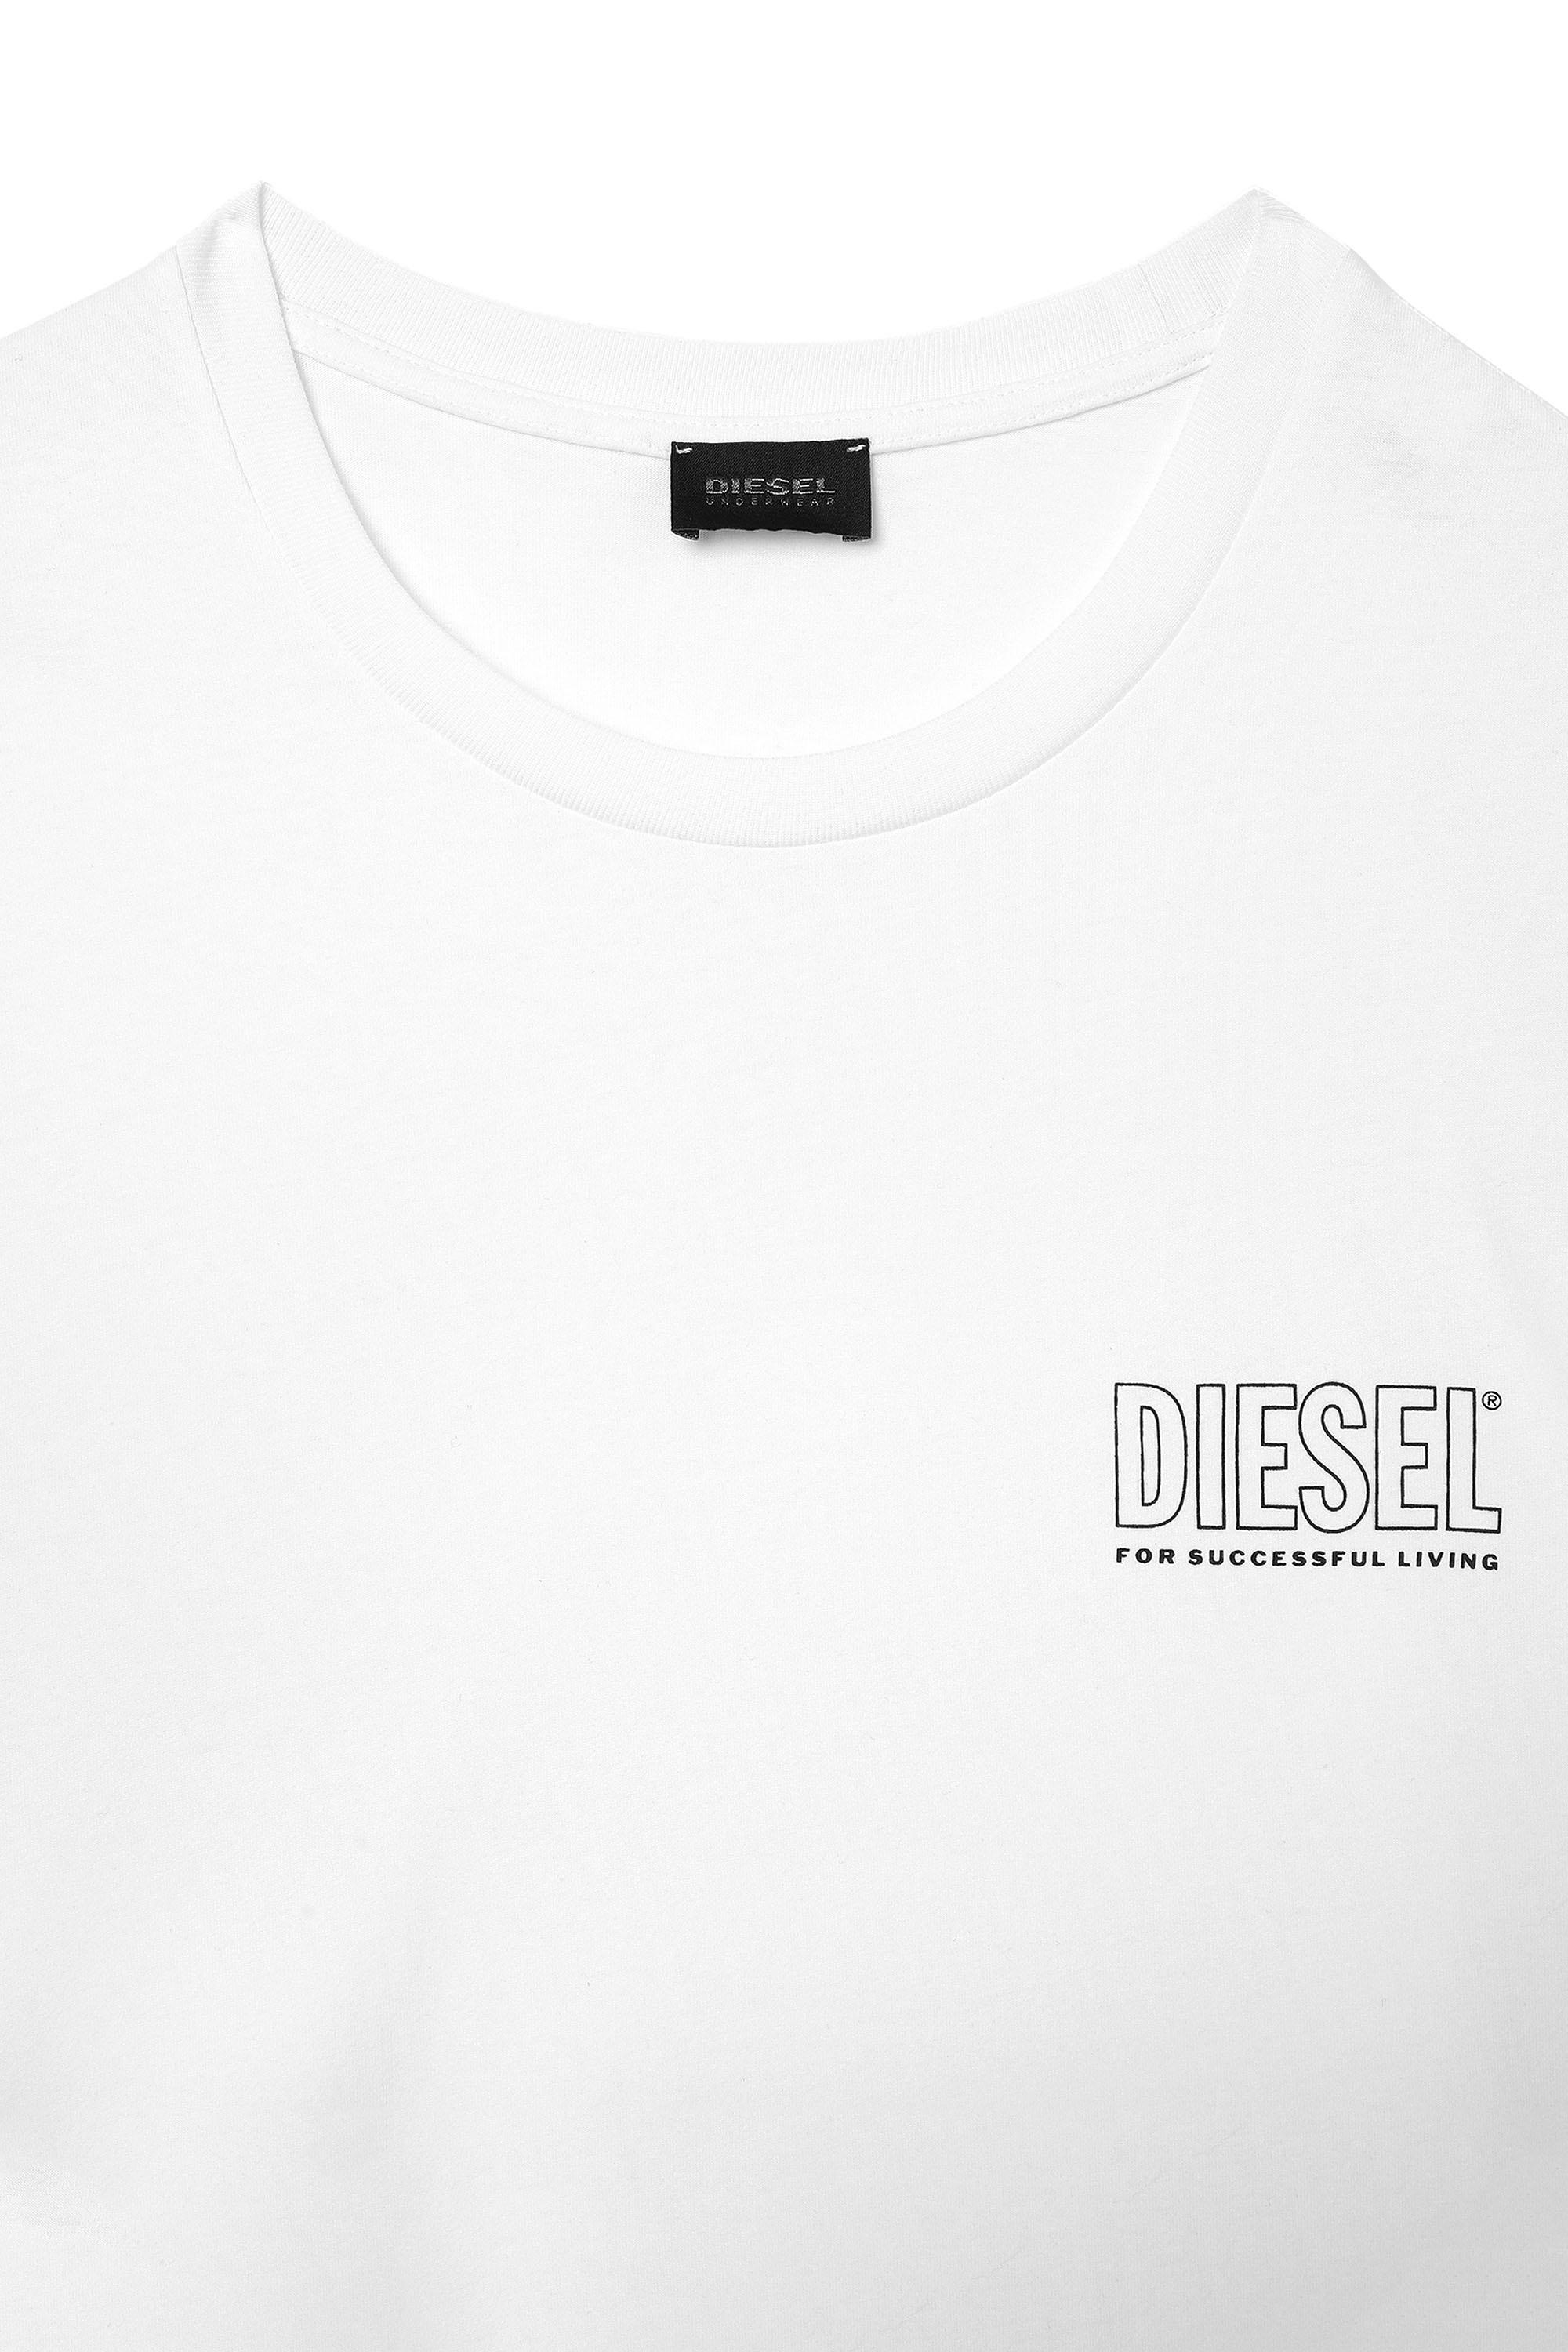 Diesel - UMLT-JAKE,  - Image 3